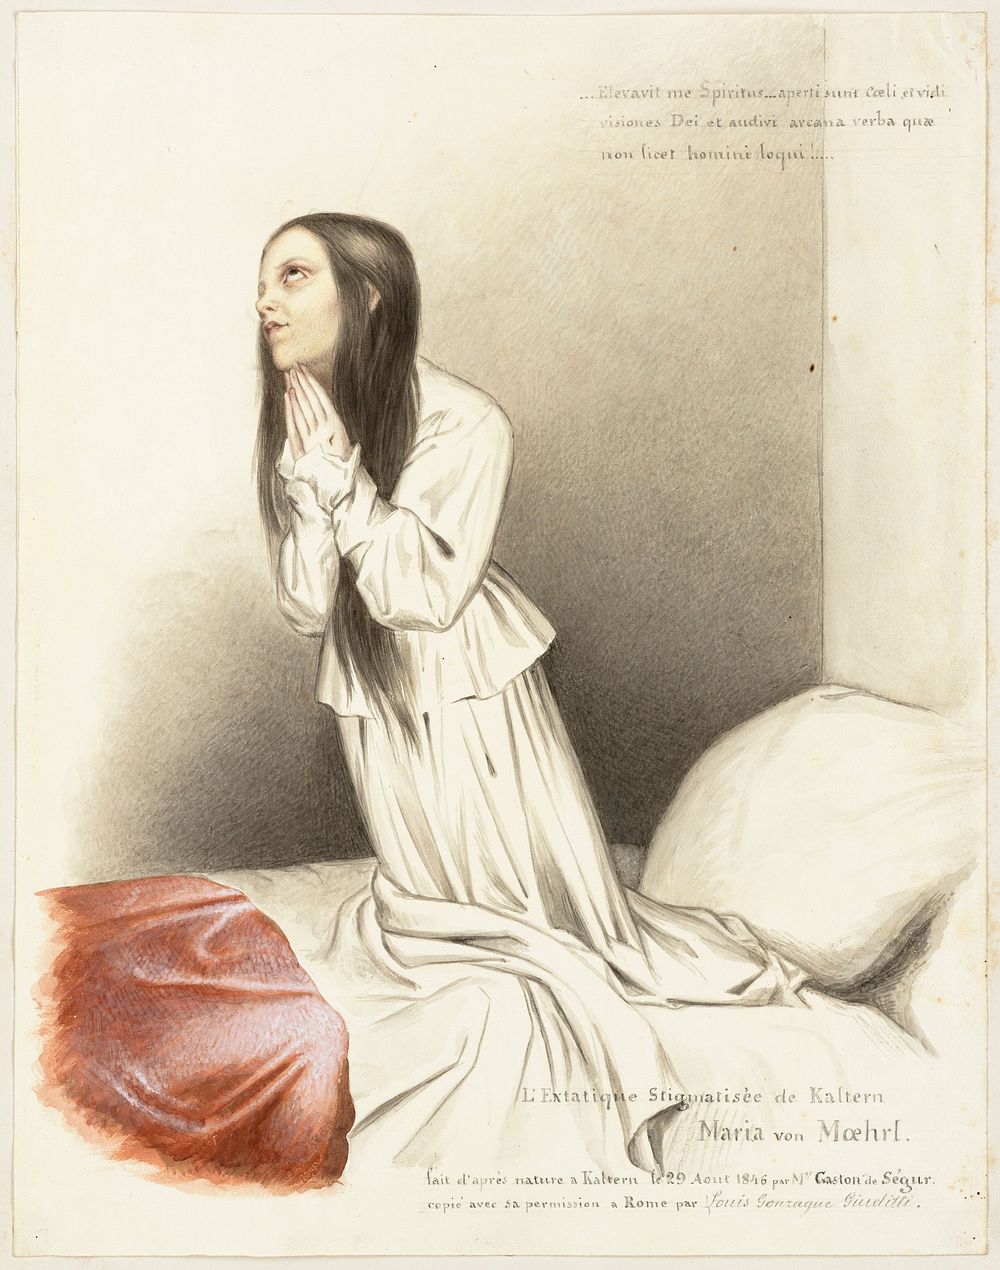 Maria von Moehrl, a girl with stigmata on her hands. Watercolour by L. Giuditti after L.G. de Ségur, 1846.